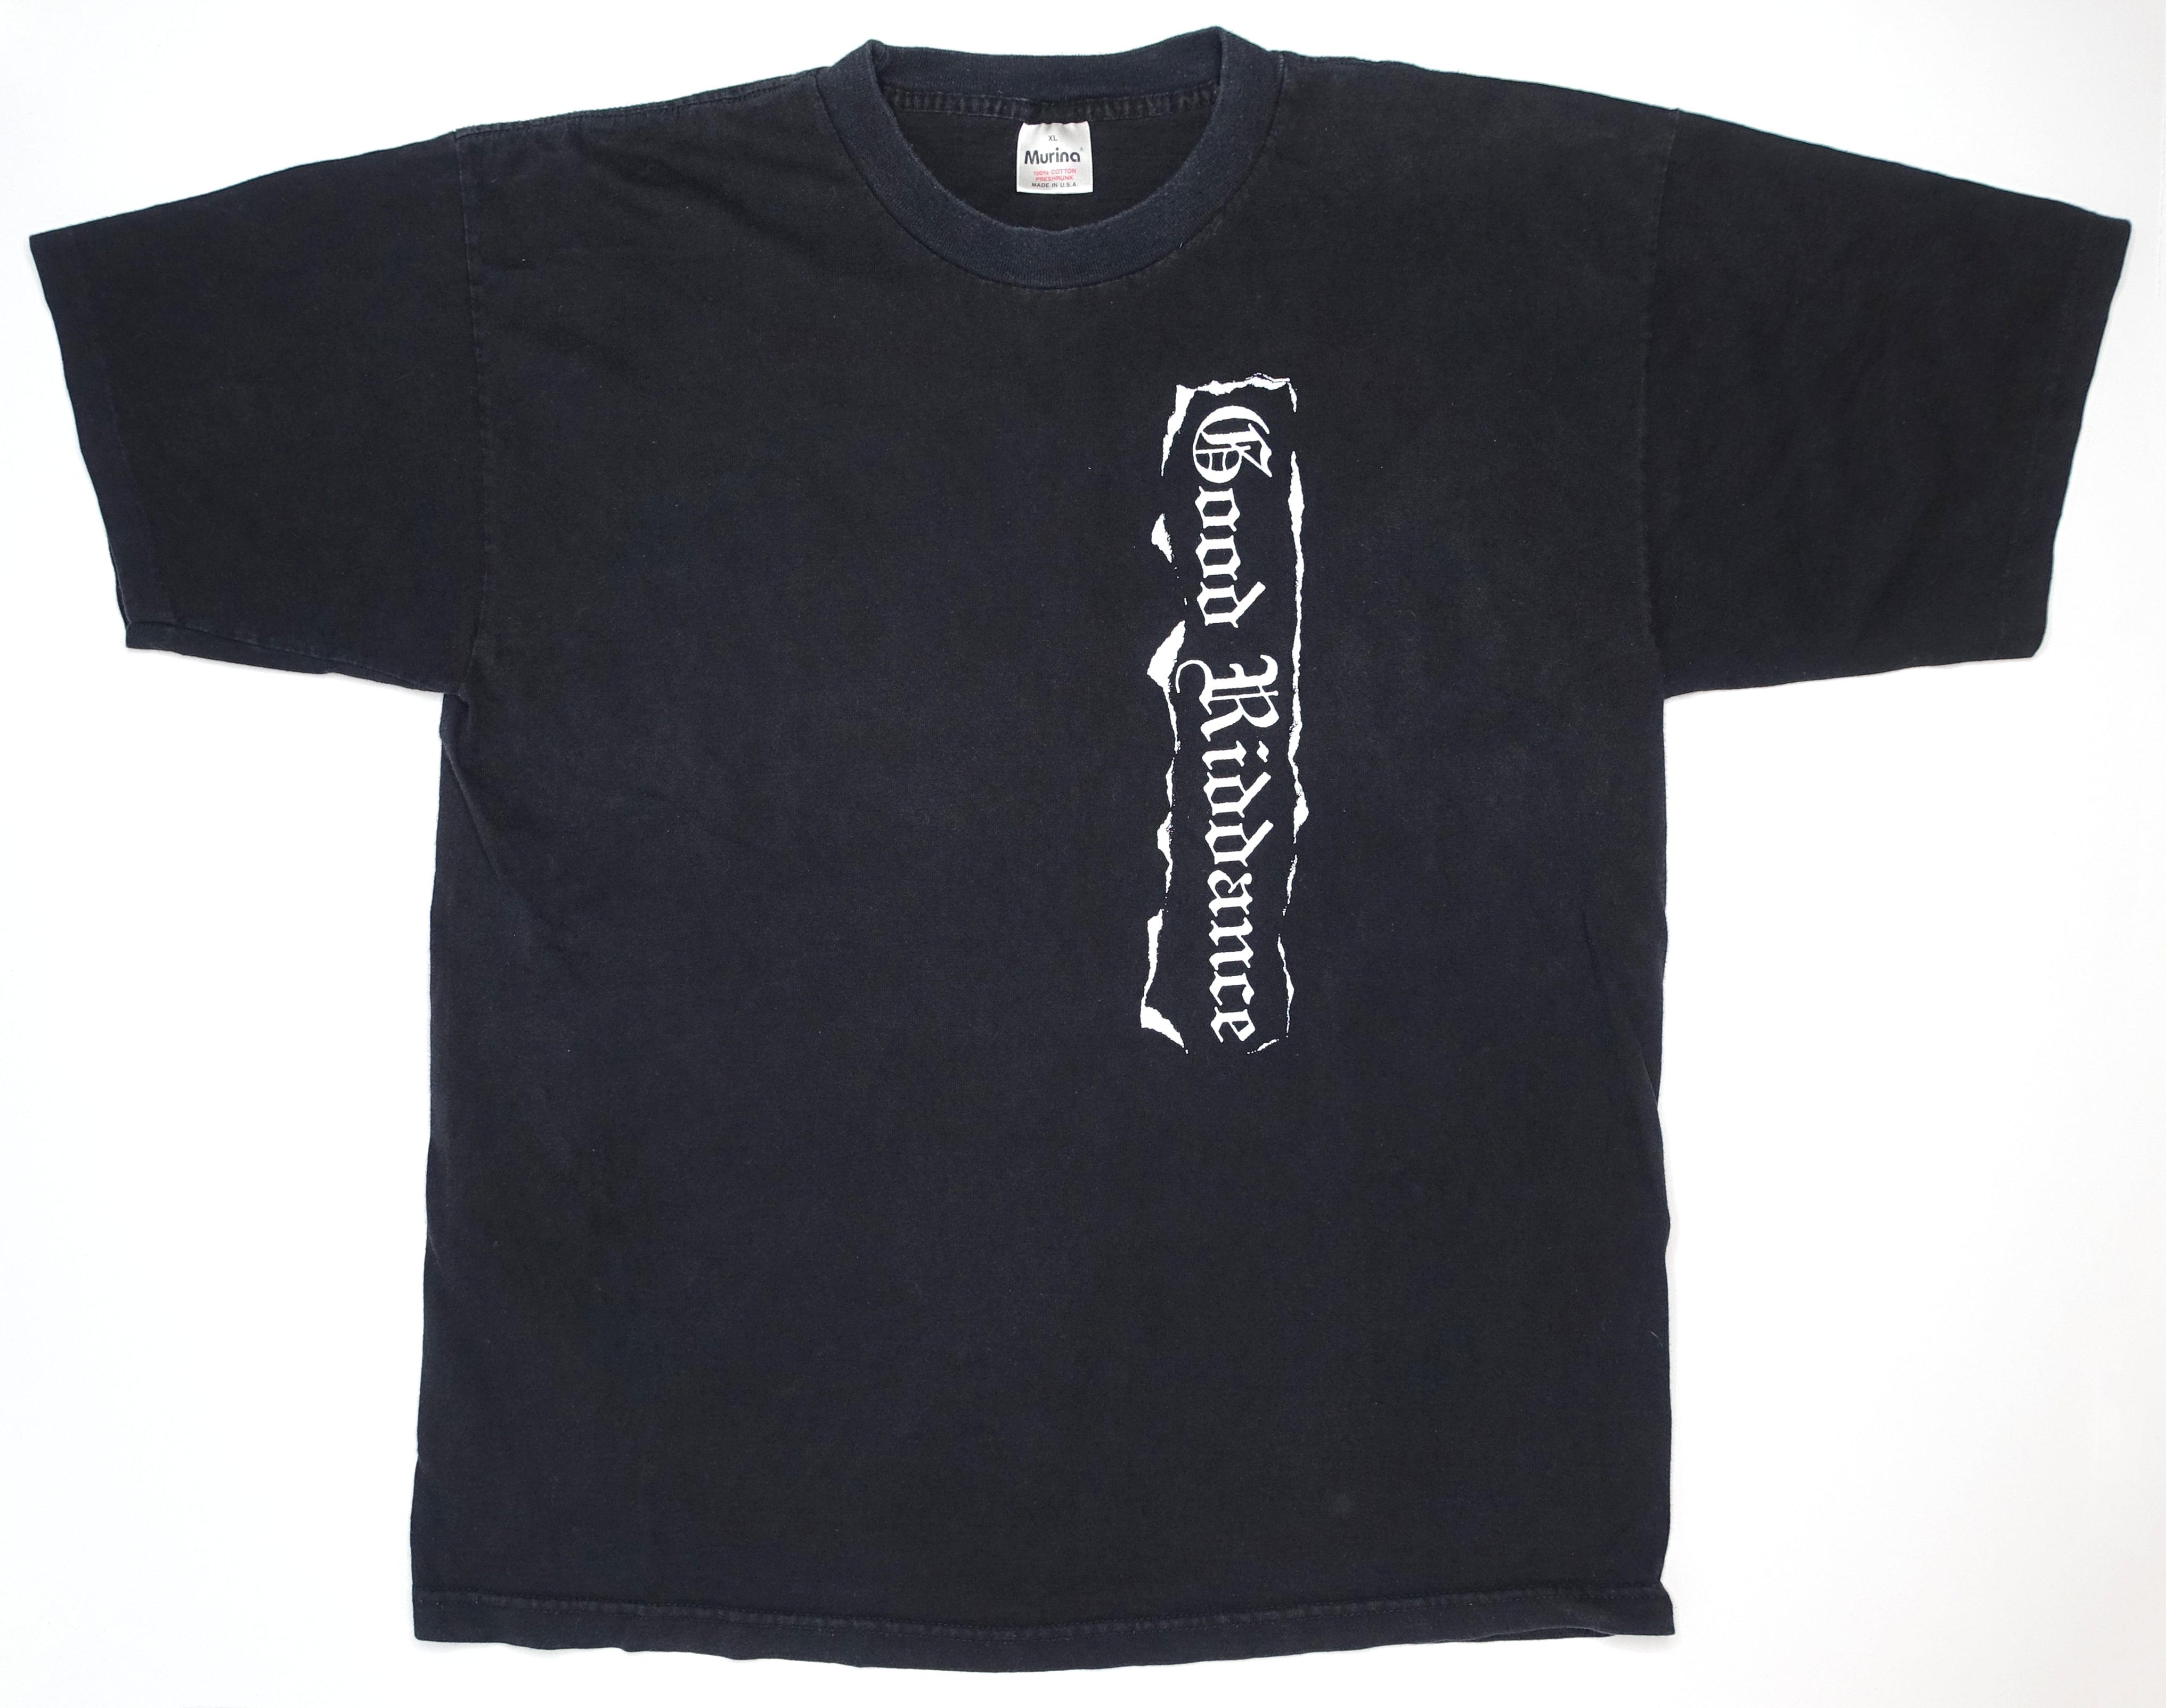 Good Riddance - This Shirt Repels Fascists 1995 Tour Shirt Size XL